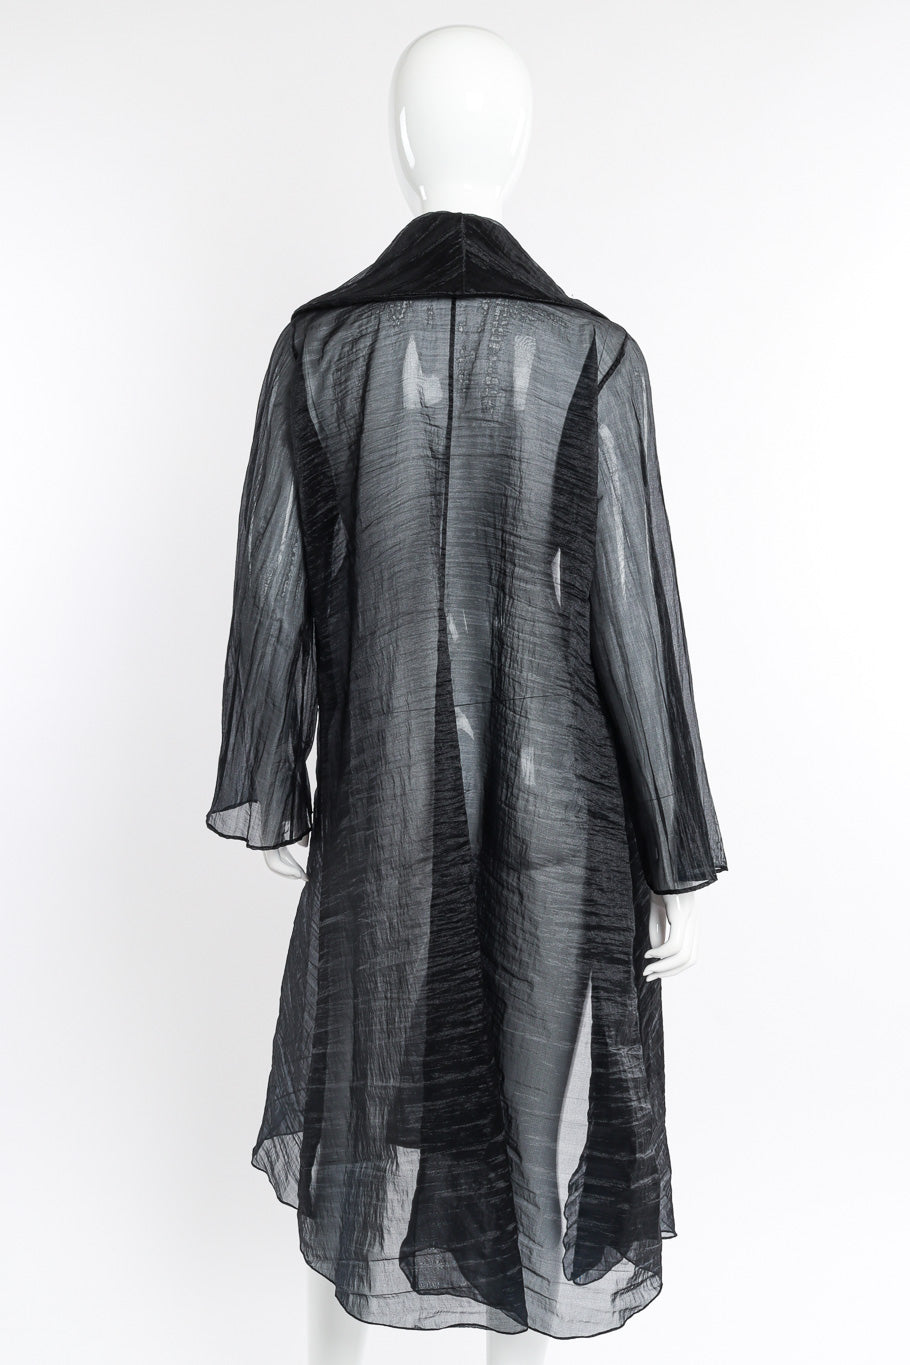 Silk duster by Donna Karan on mannequin back @recessla